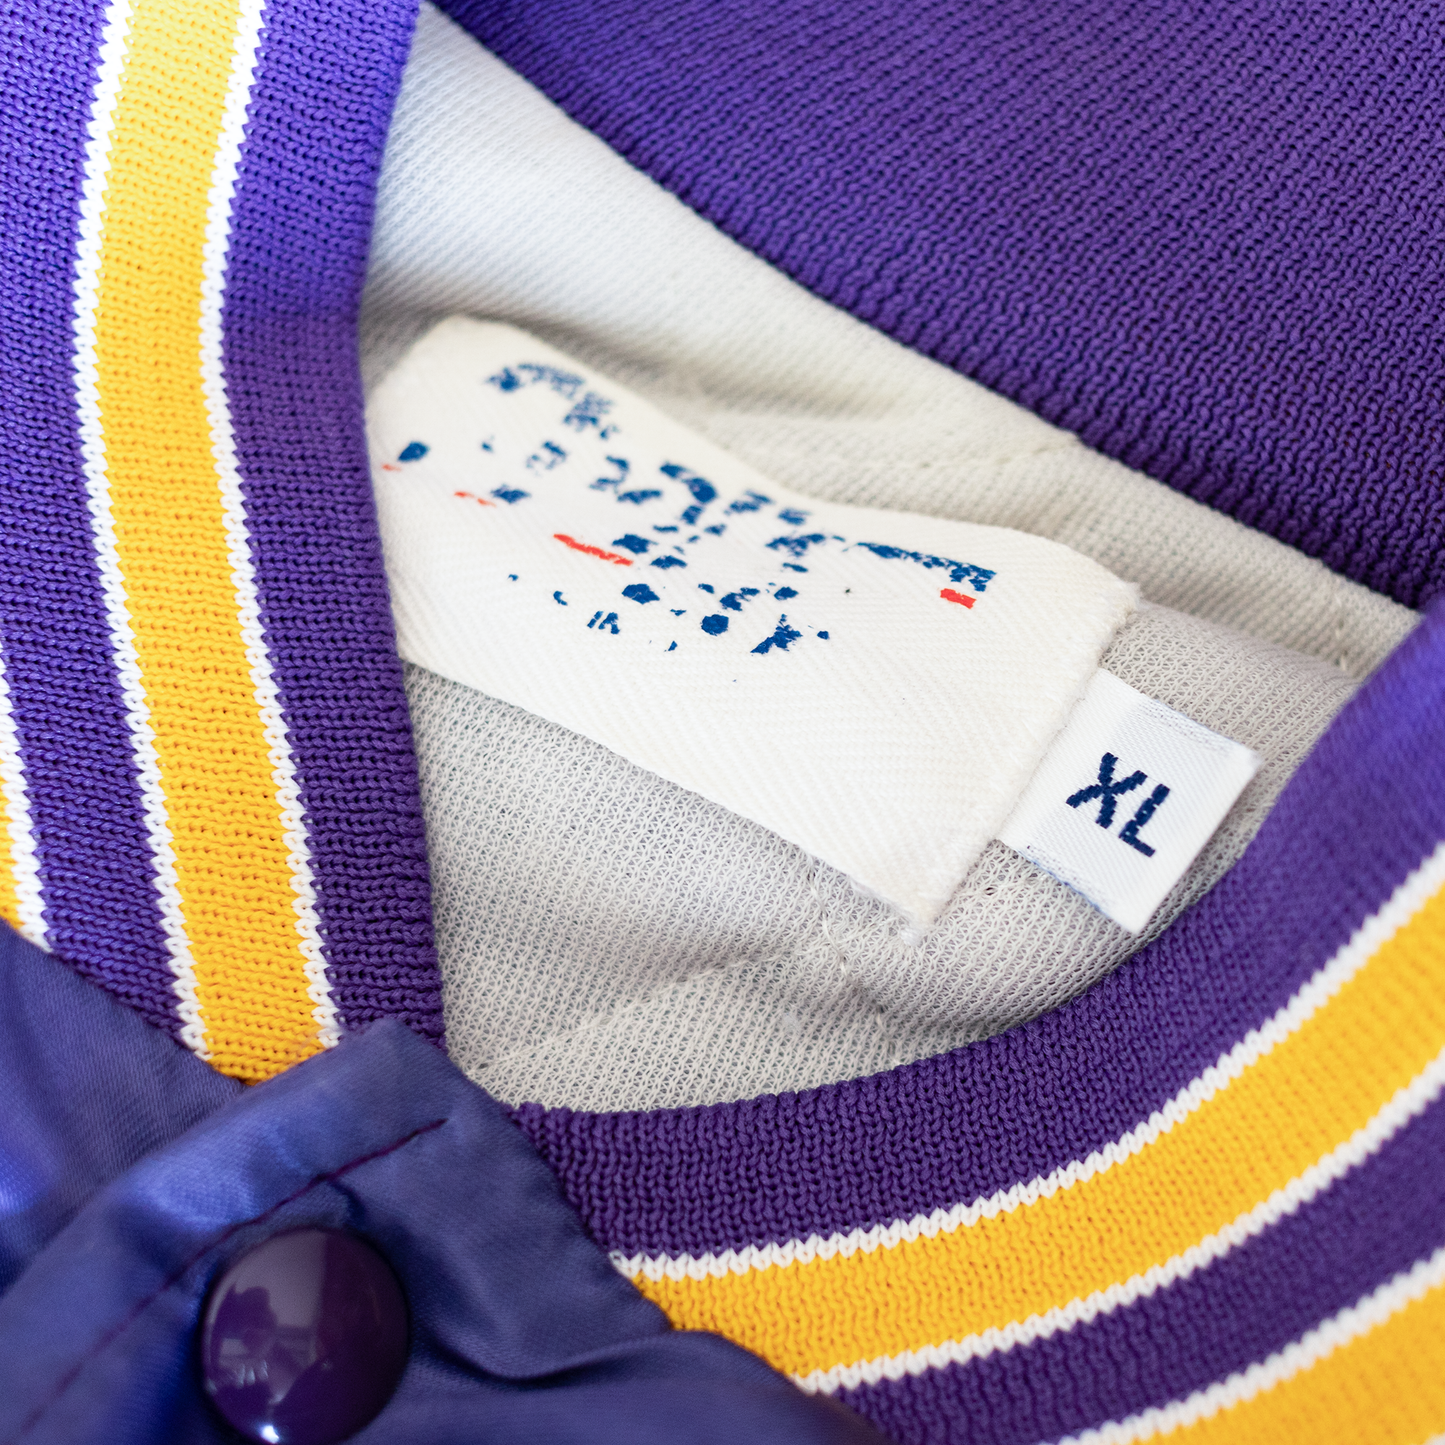 Vintage NFL Minnesota Vikings Chalk Line Silk Bomber Jacket (XL)